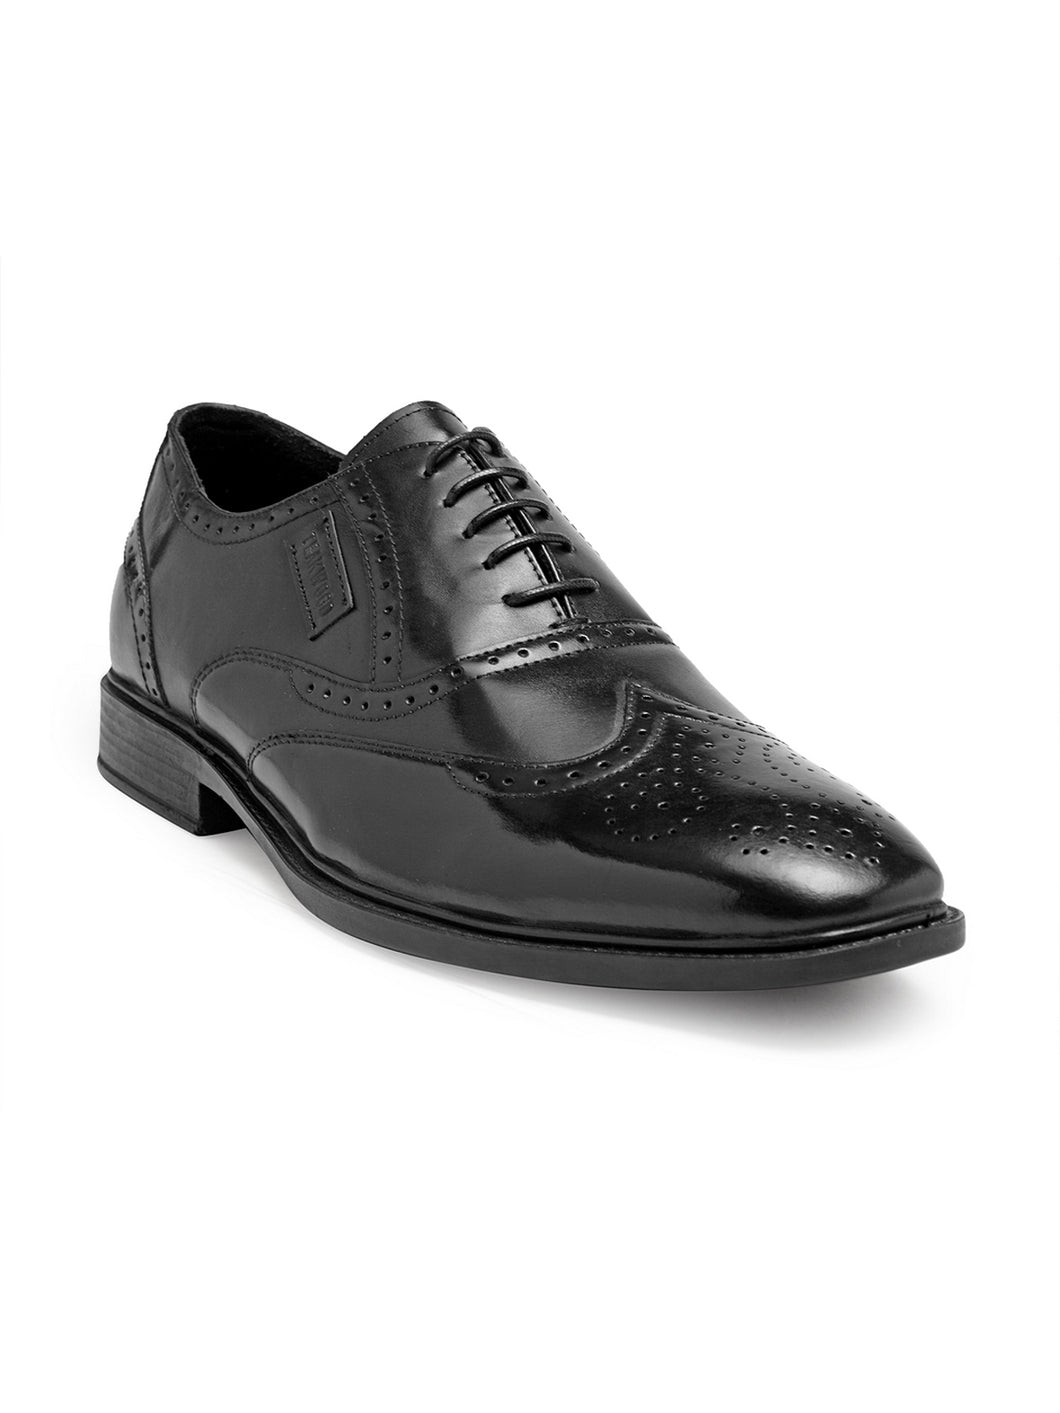 Teakwood Genuine Leather Black Oxford Shoes